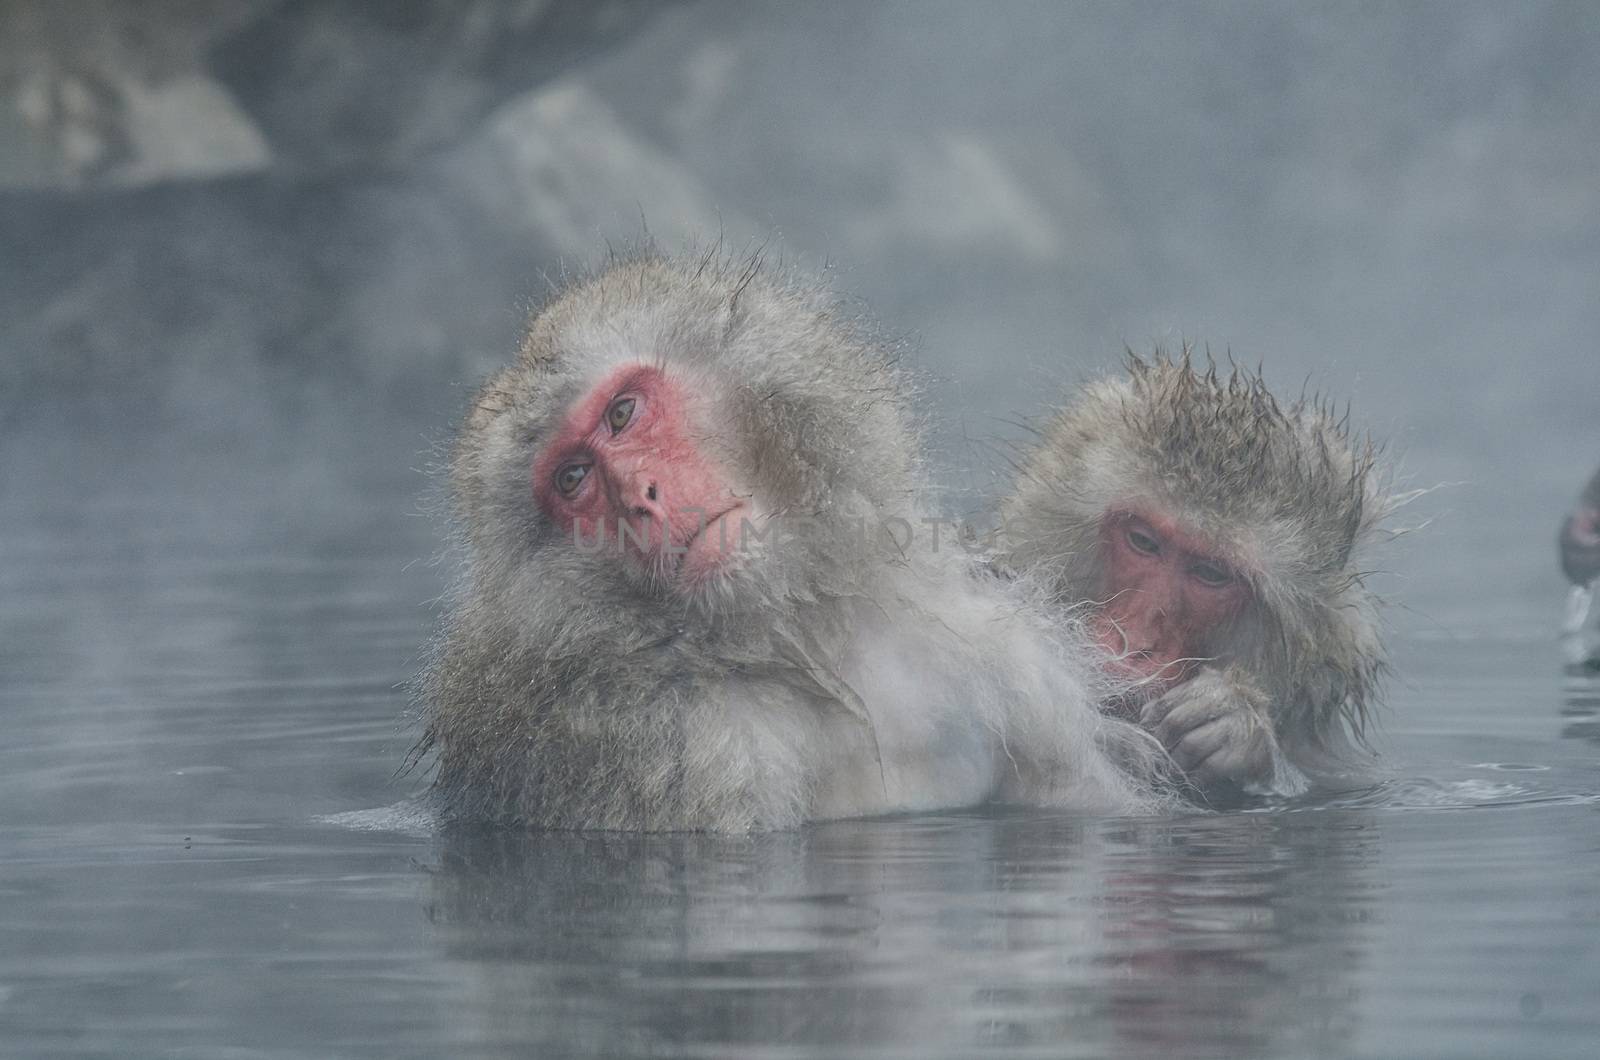 Japanese Snow monkey Macaque in hot spring Onsen Jigokudan Park, Nakano, Japan